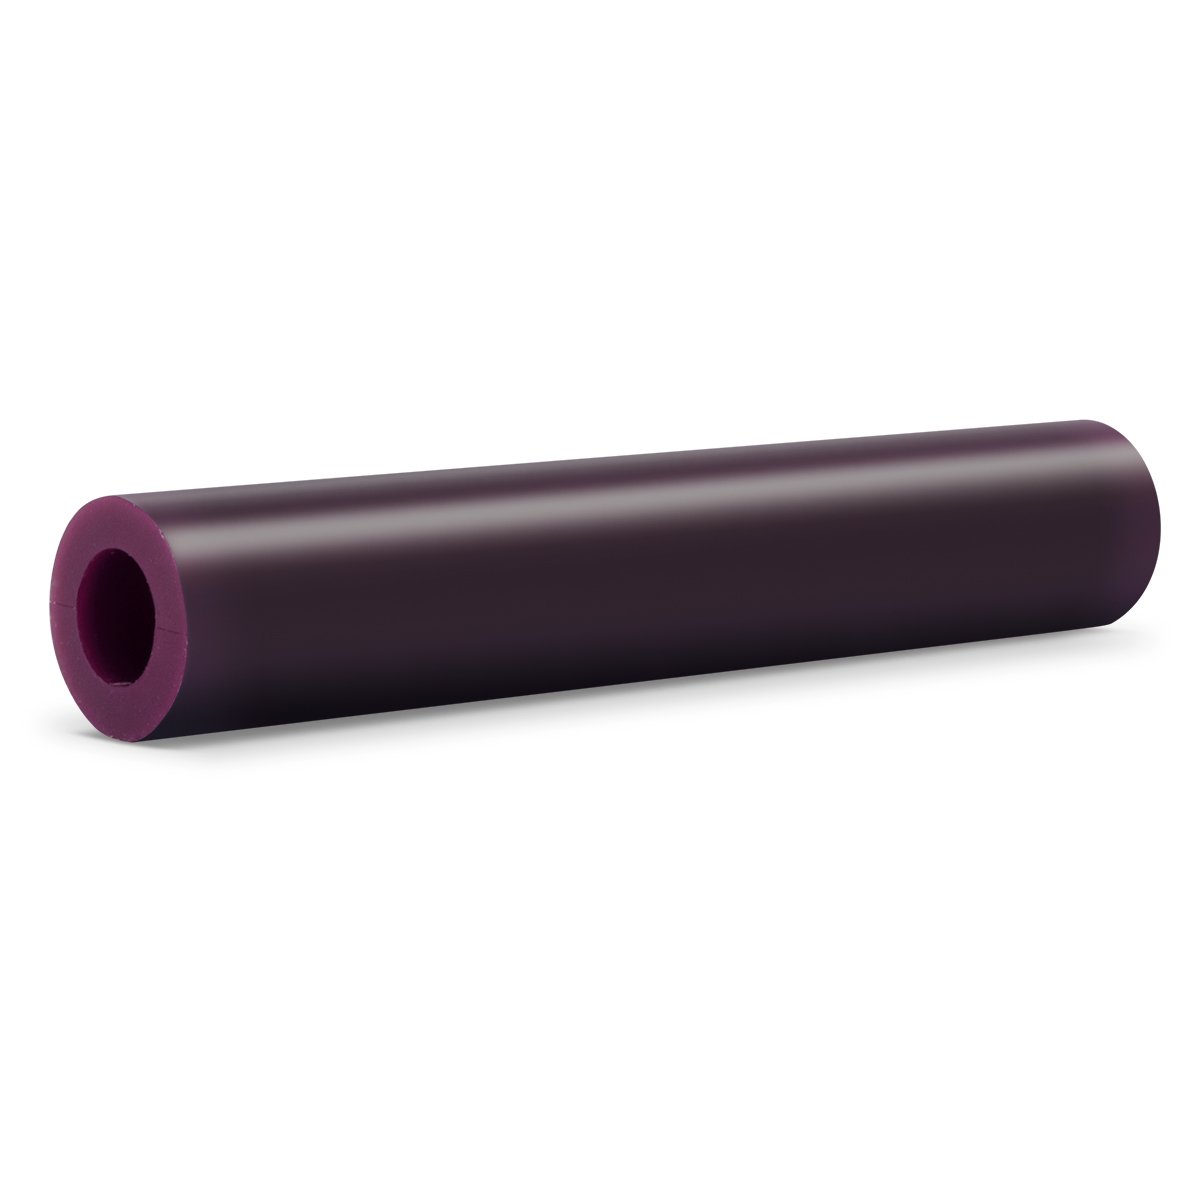 Carving wax tube, Ø 27 mm, center hole, purple, medium